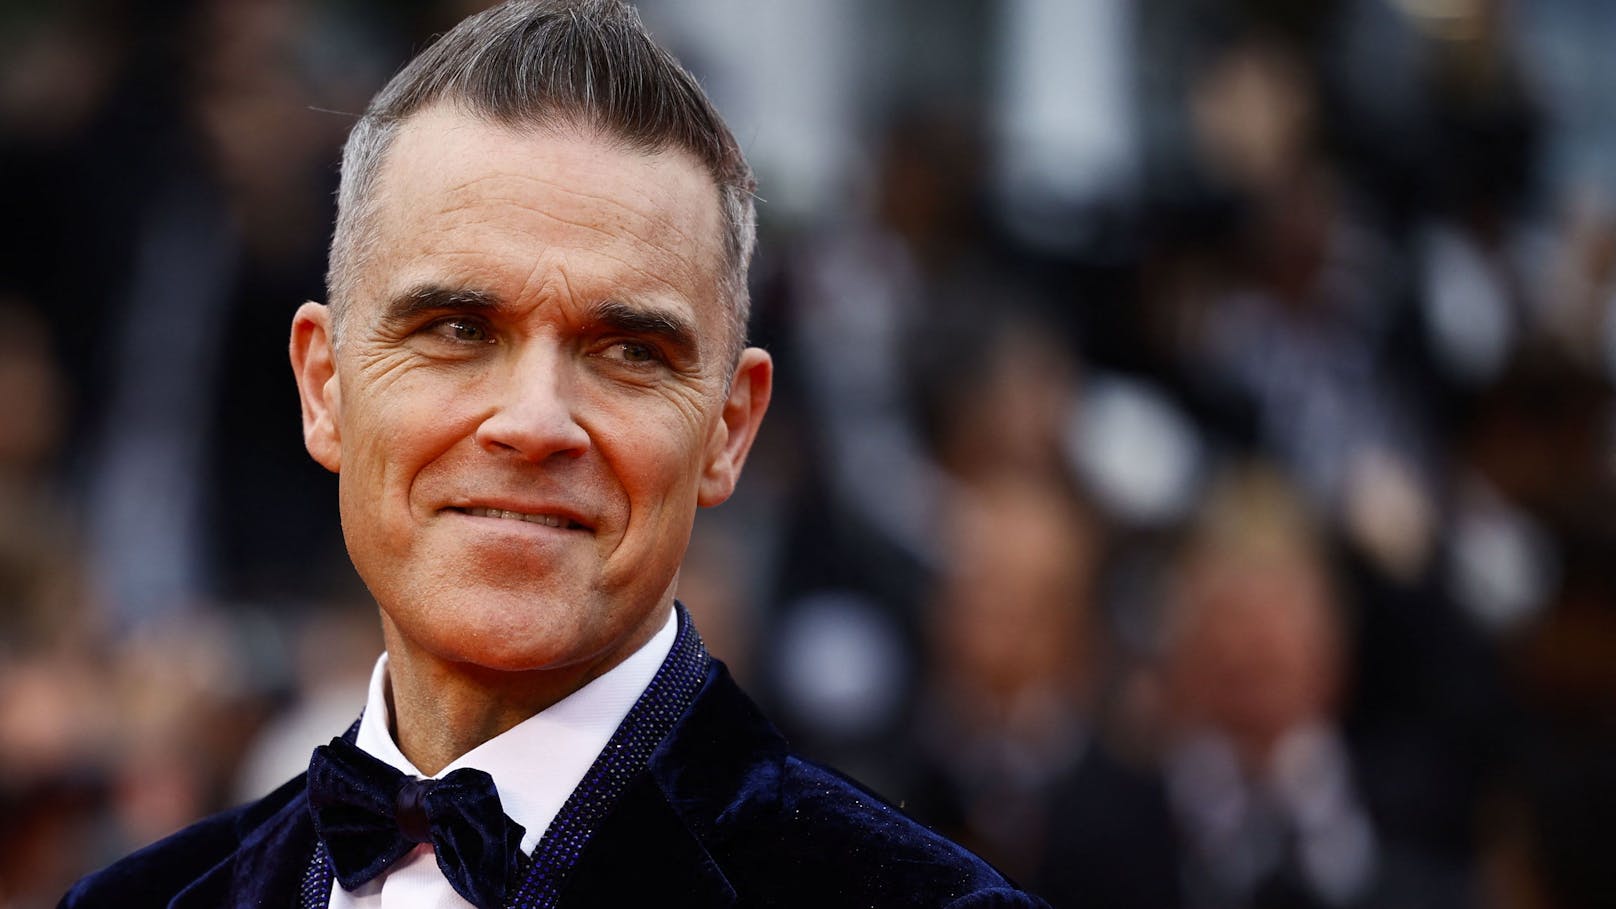 Sänger <strong>Robbie Williams</strong> ("Let me entertain you") zieht in letzter Zeit gerne blank.